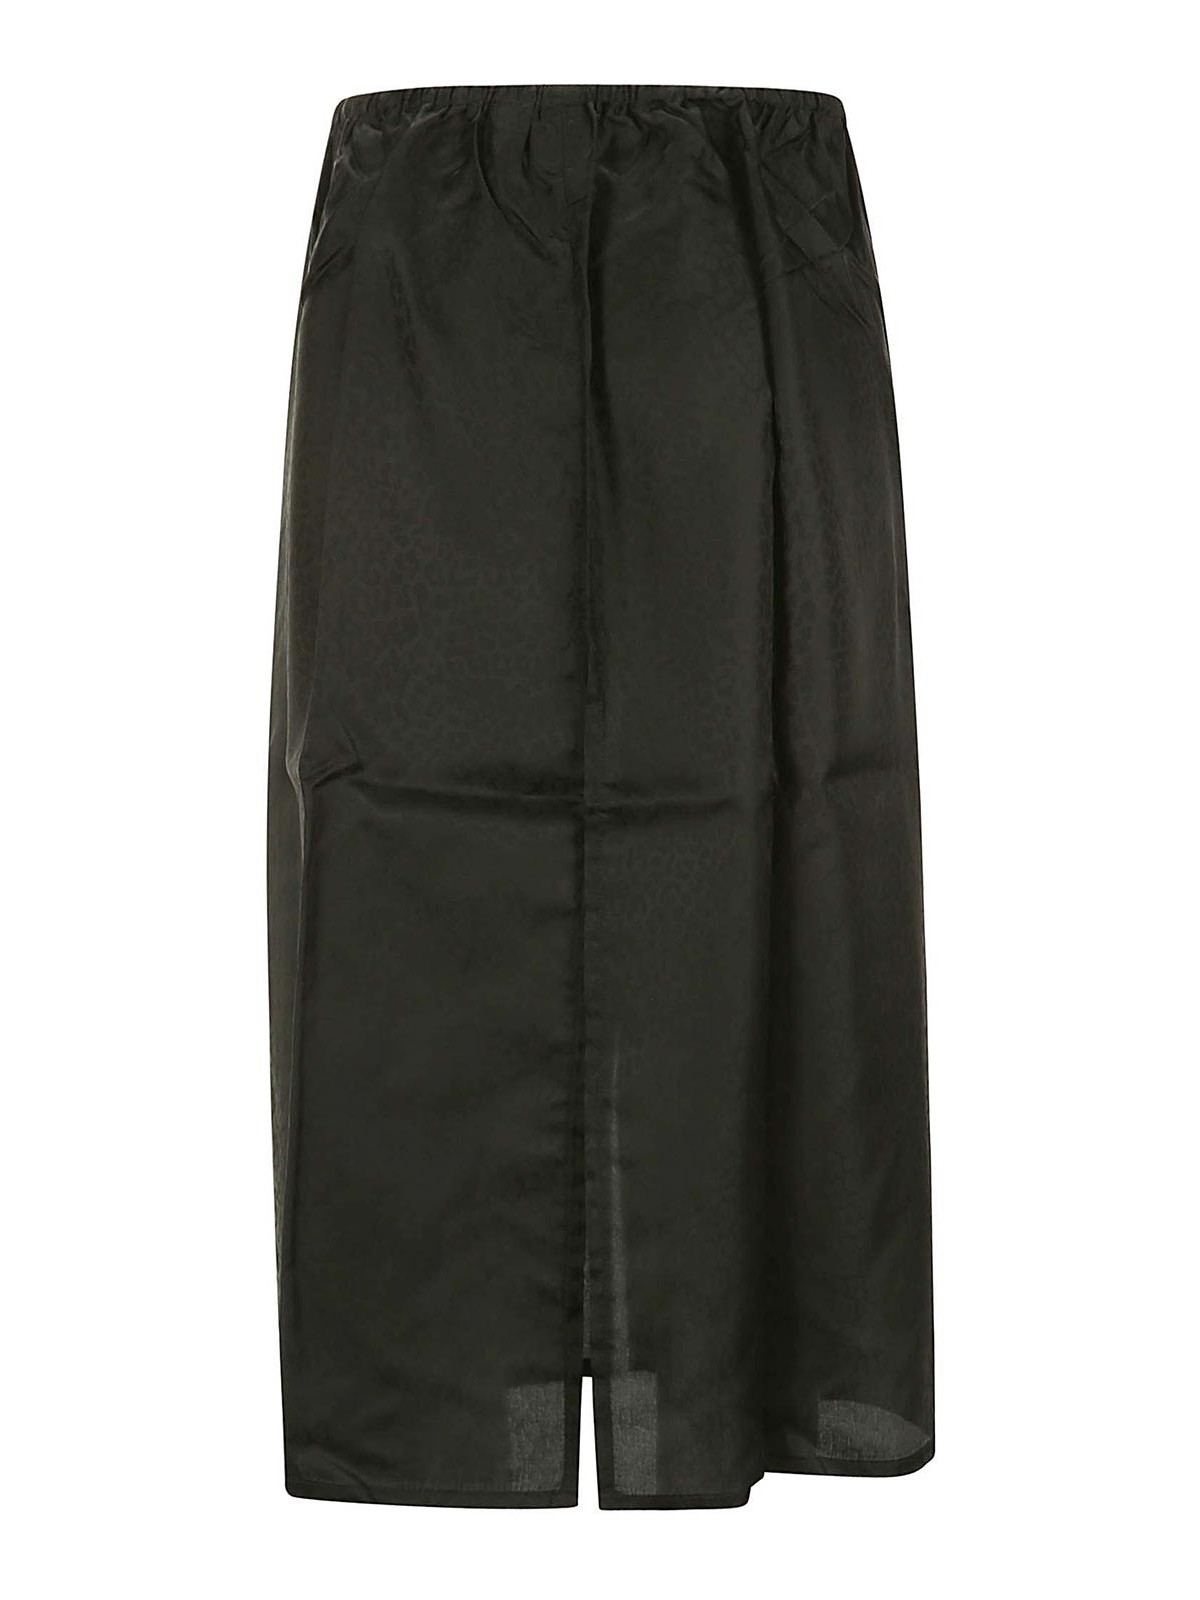 Shop Random Identities Black Skirt